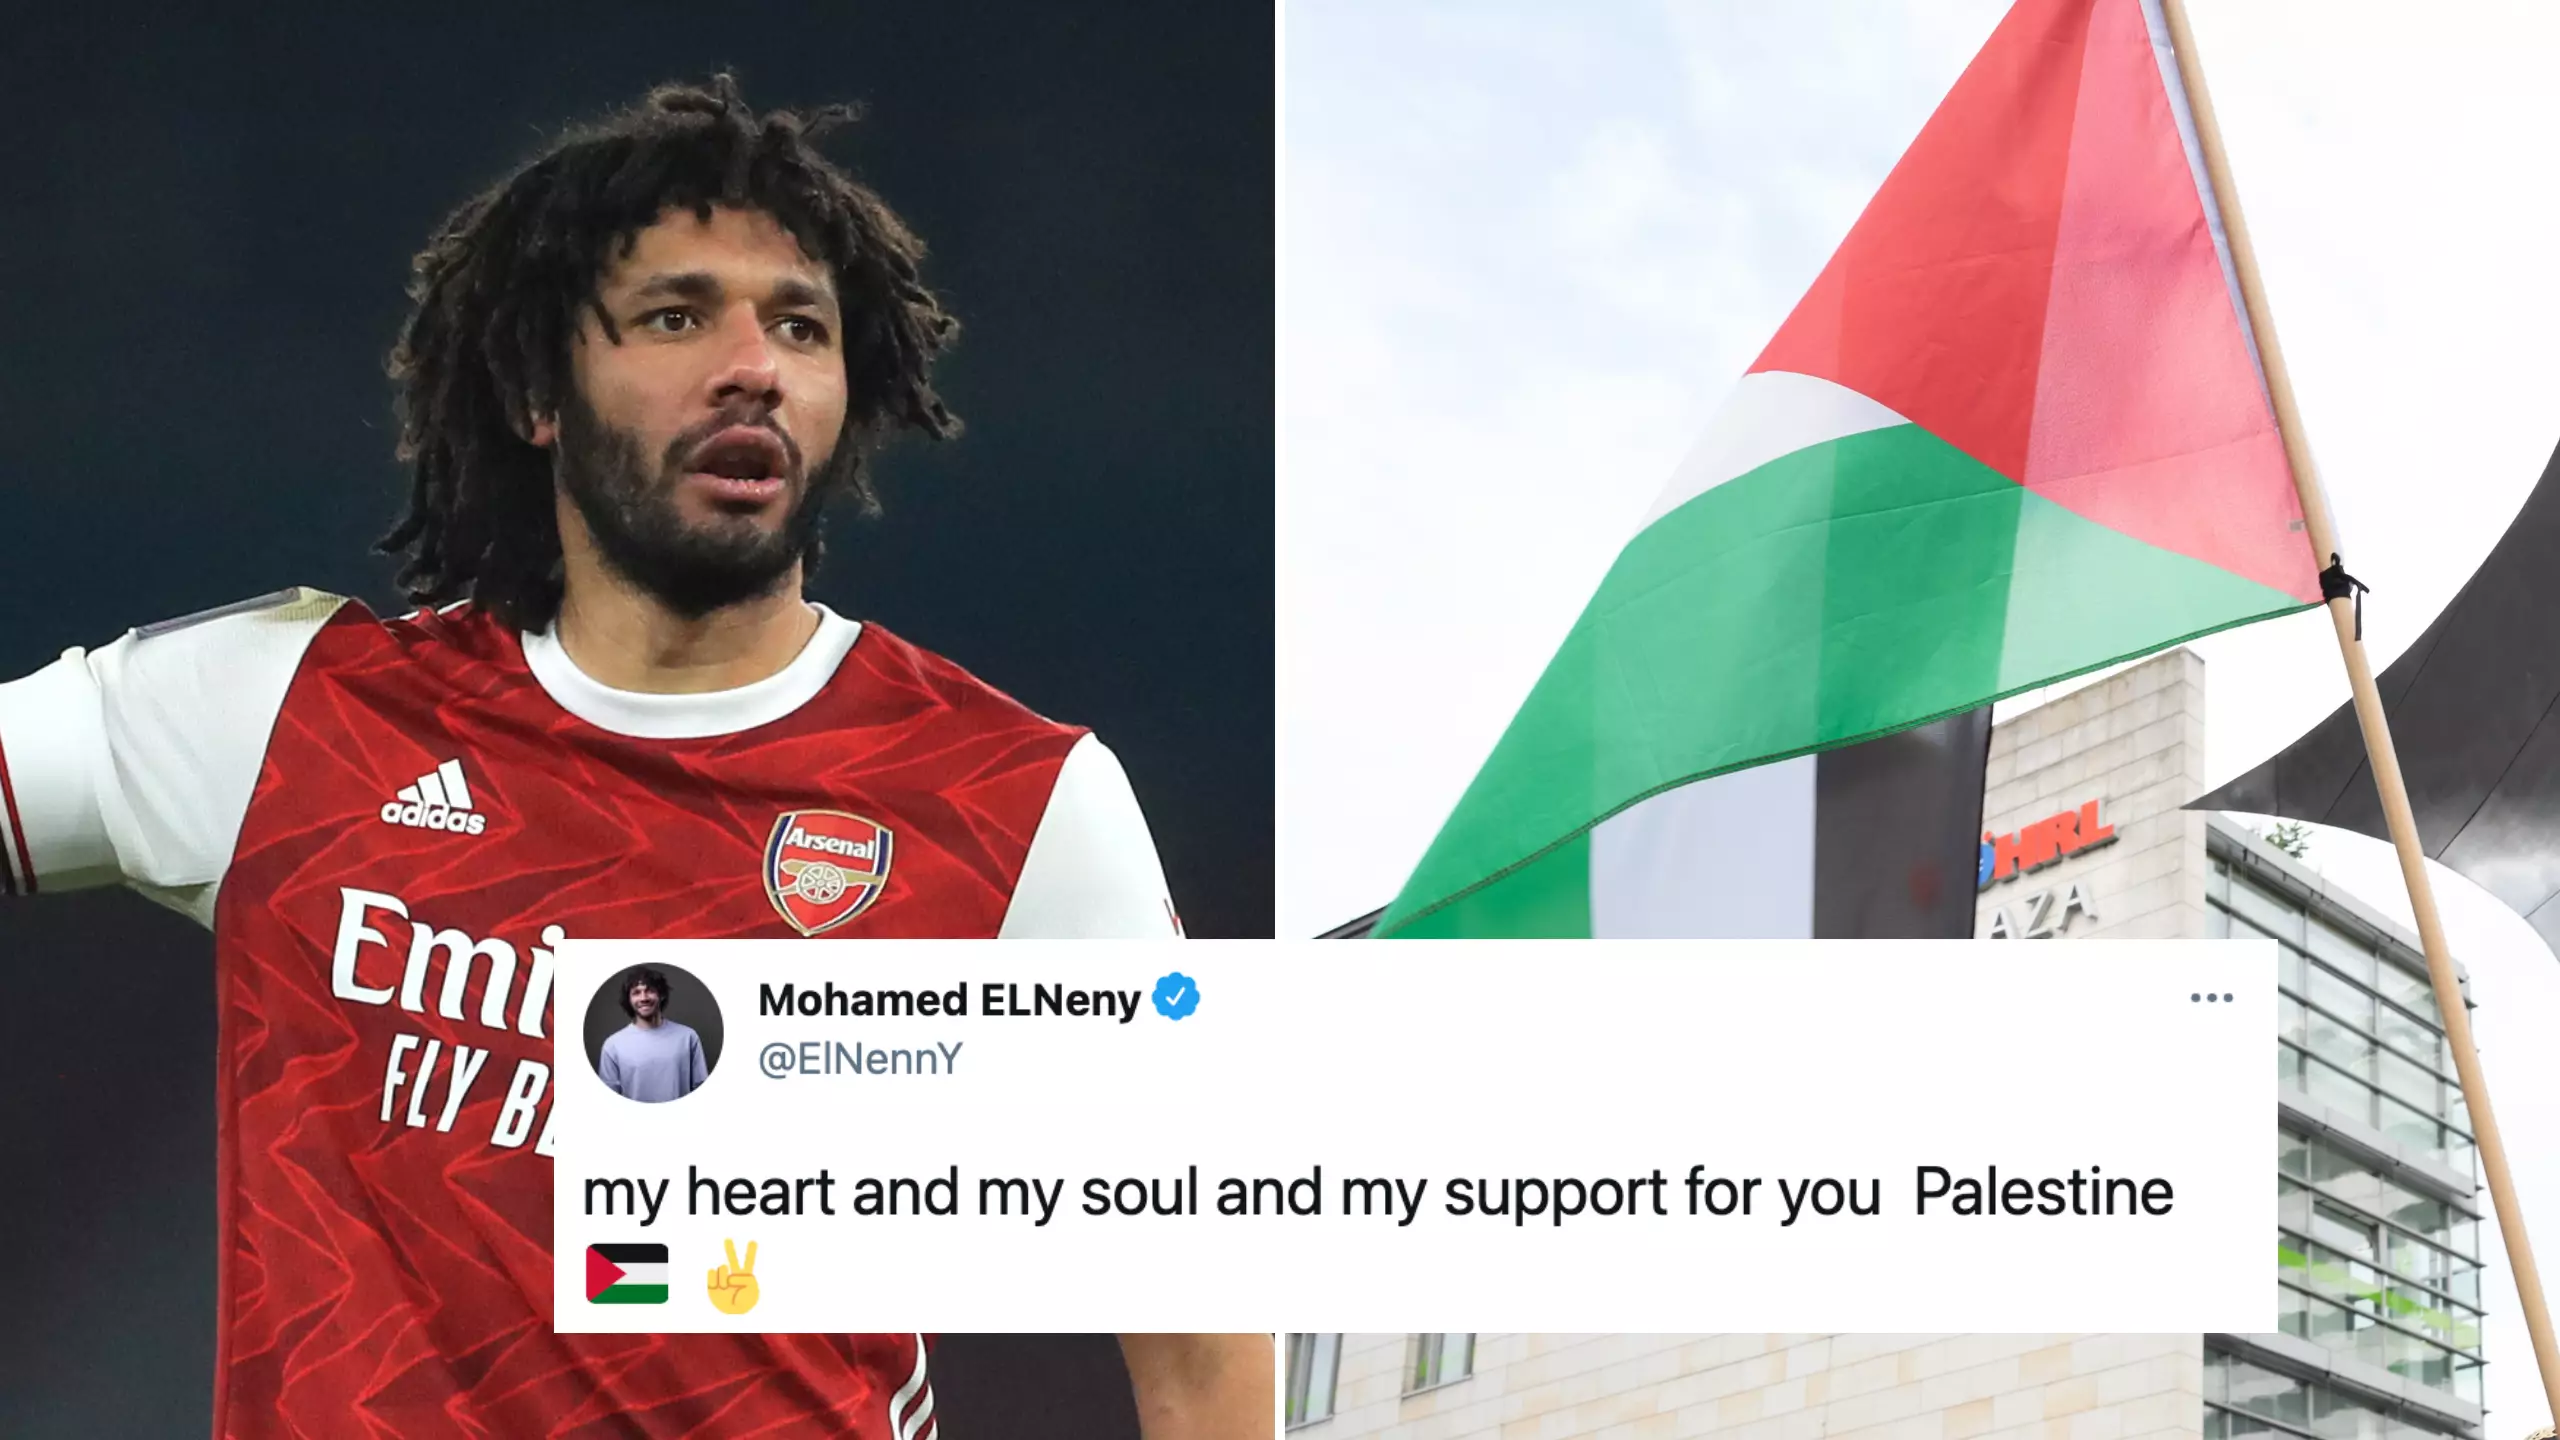 Arsenal 'In Urgent Talks' With Sponsor After Mohamed Elneny Posts Support For Palestine On Social Media